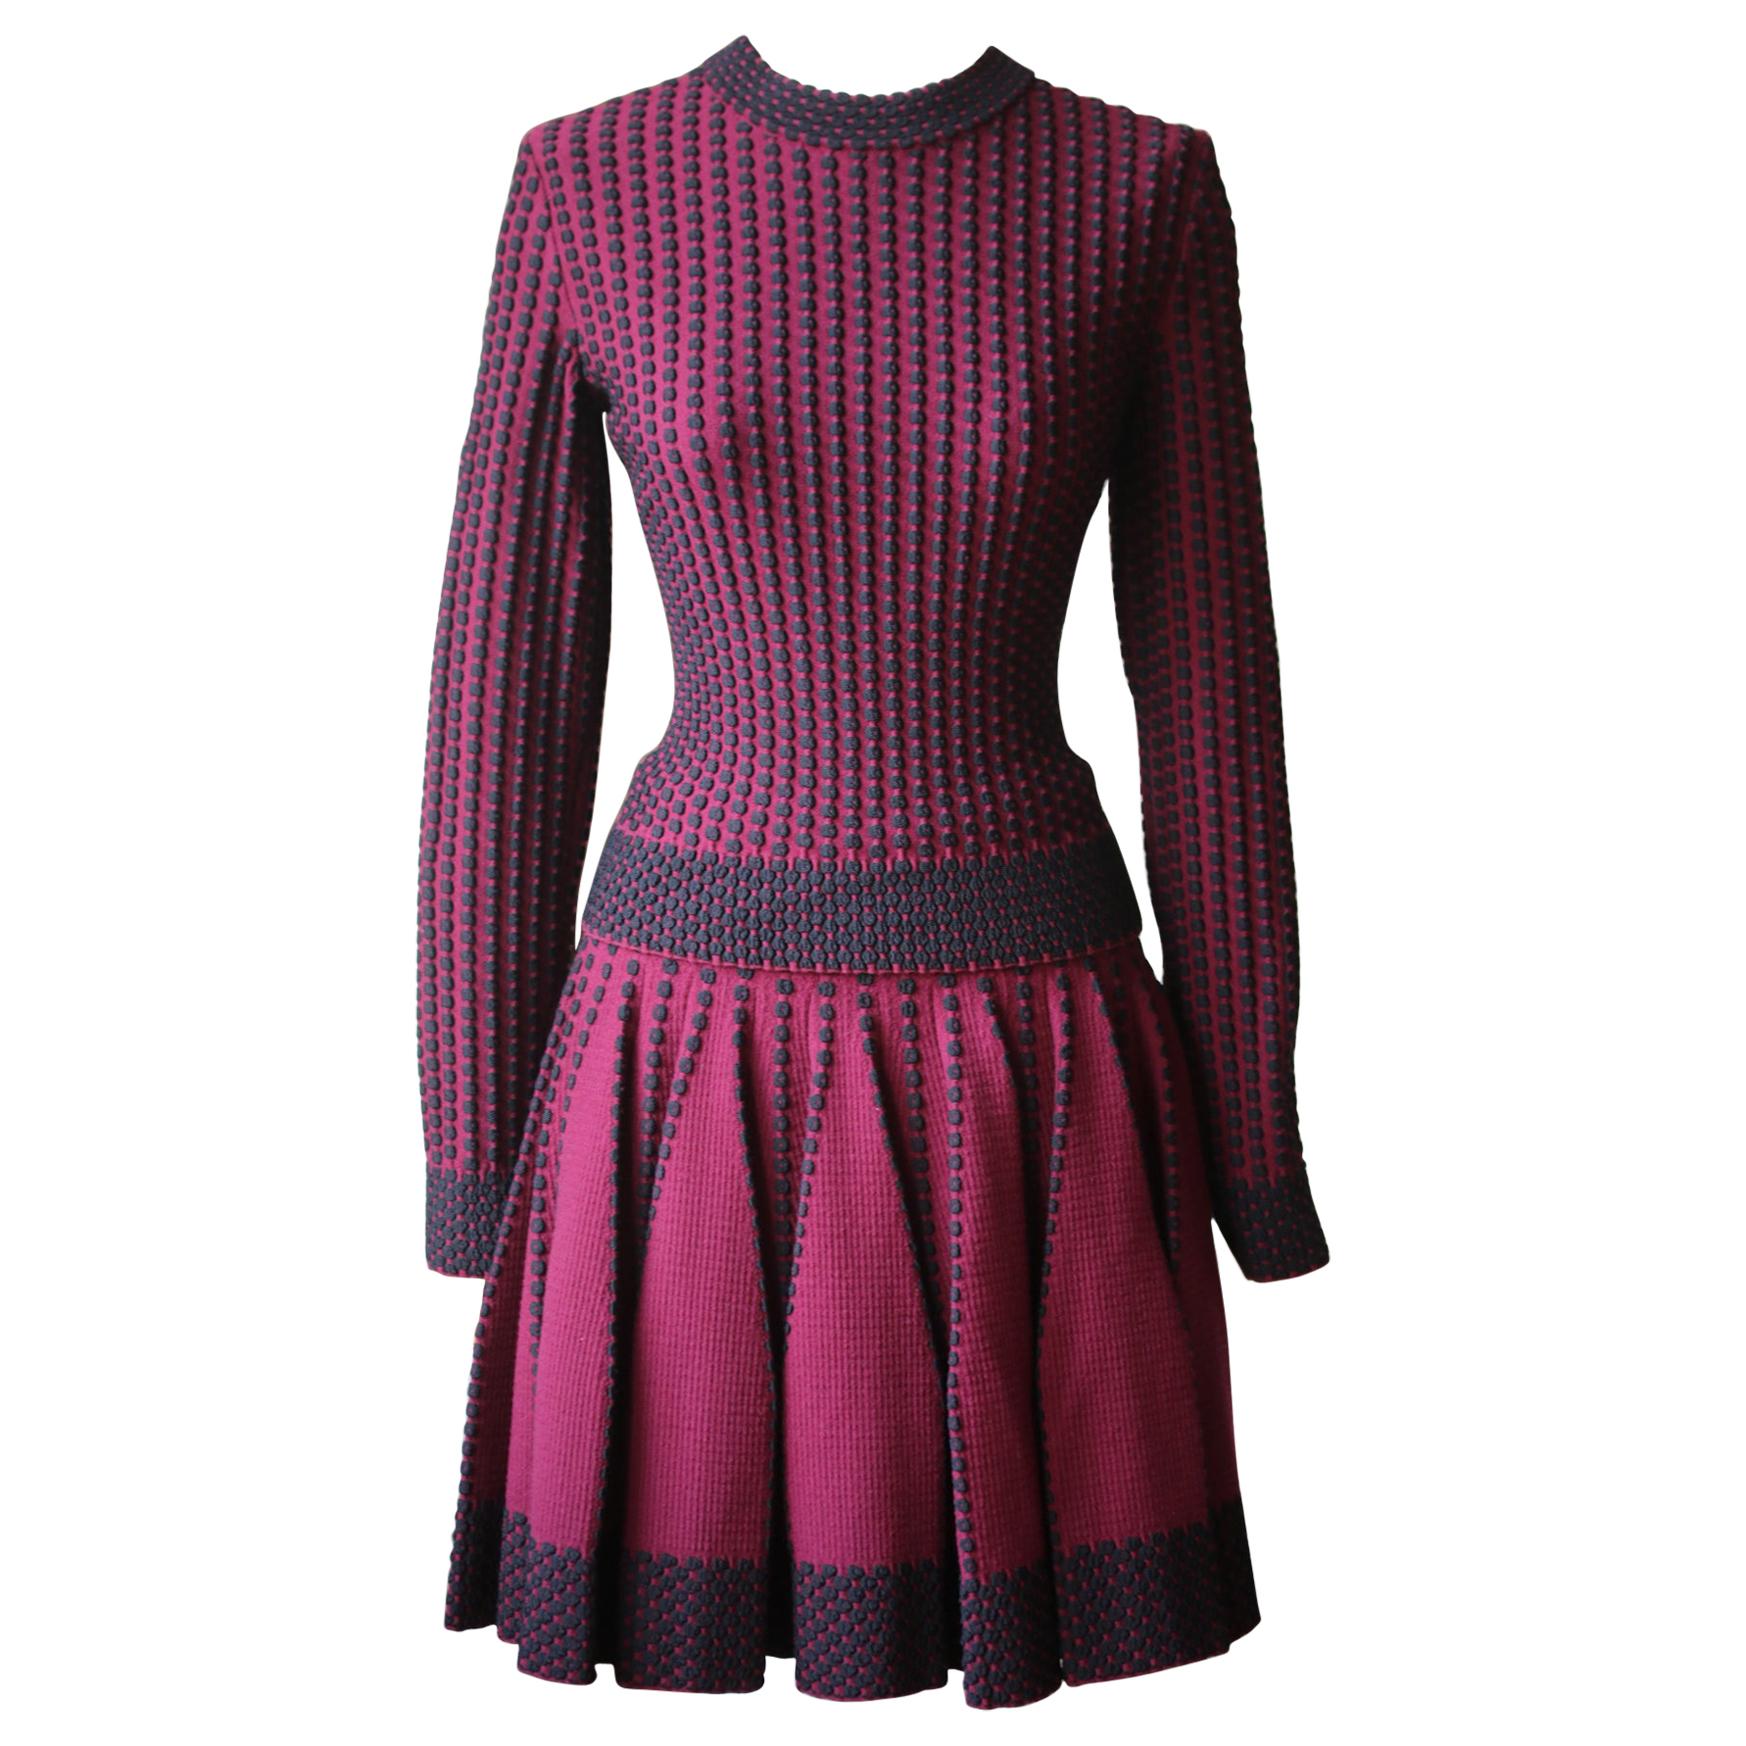 Azzedine Alaïa Pois Luxe Wool-Blend Top and Skirt 